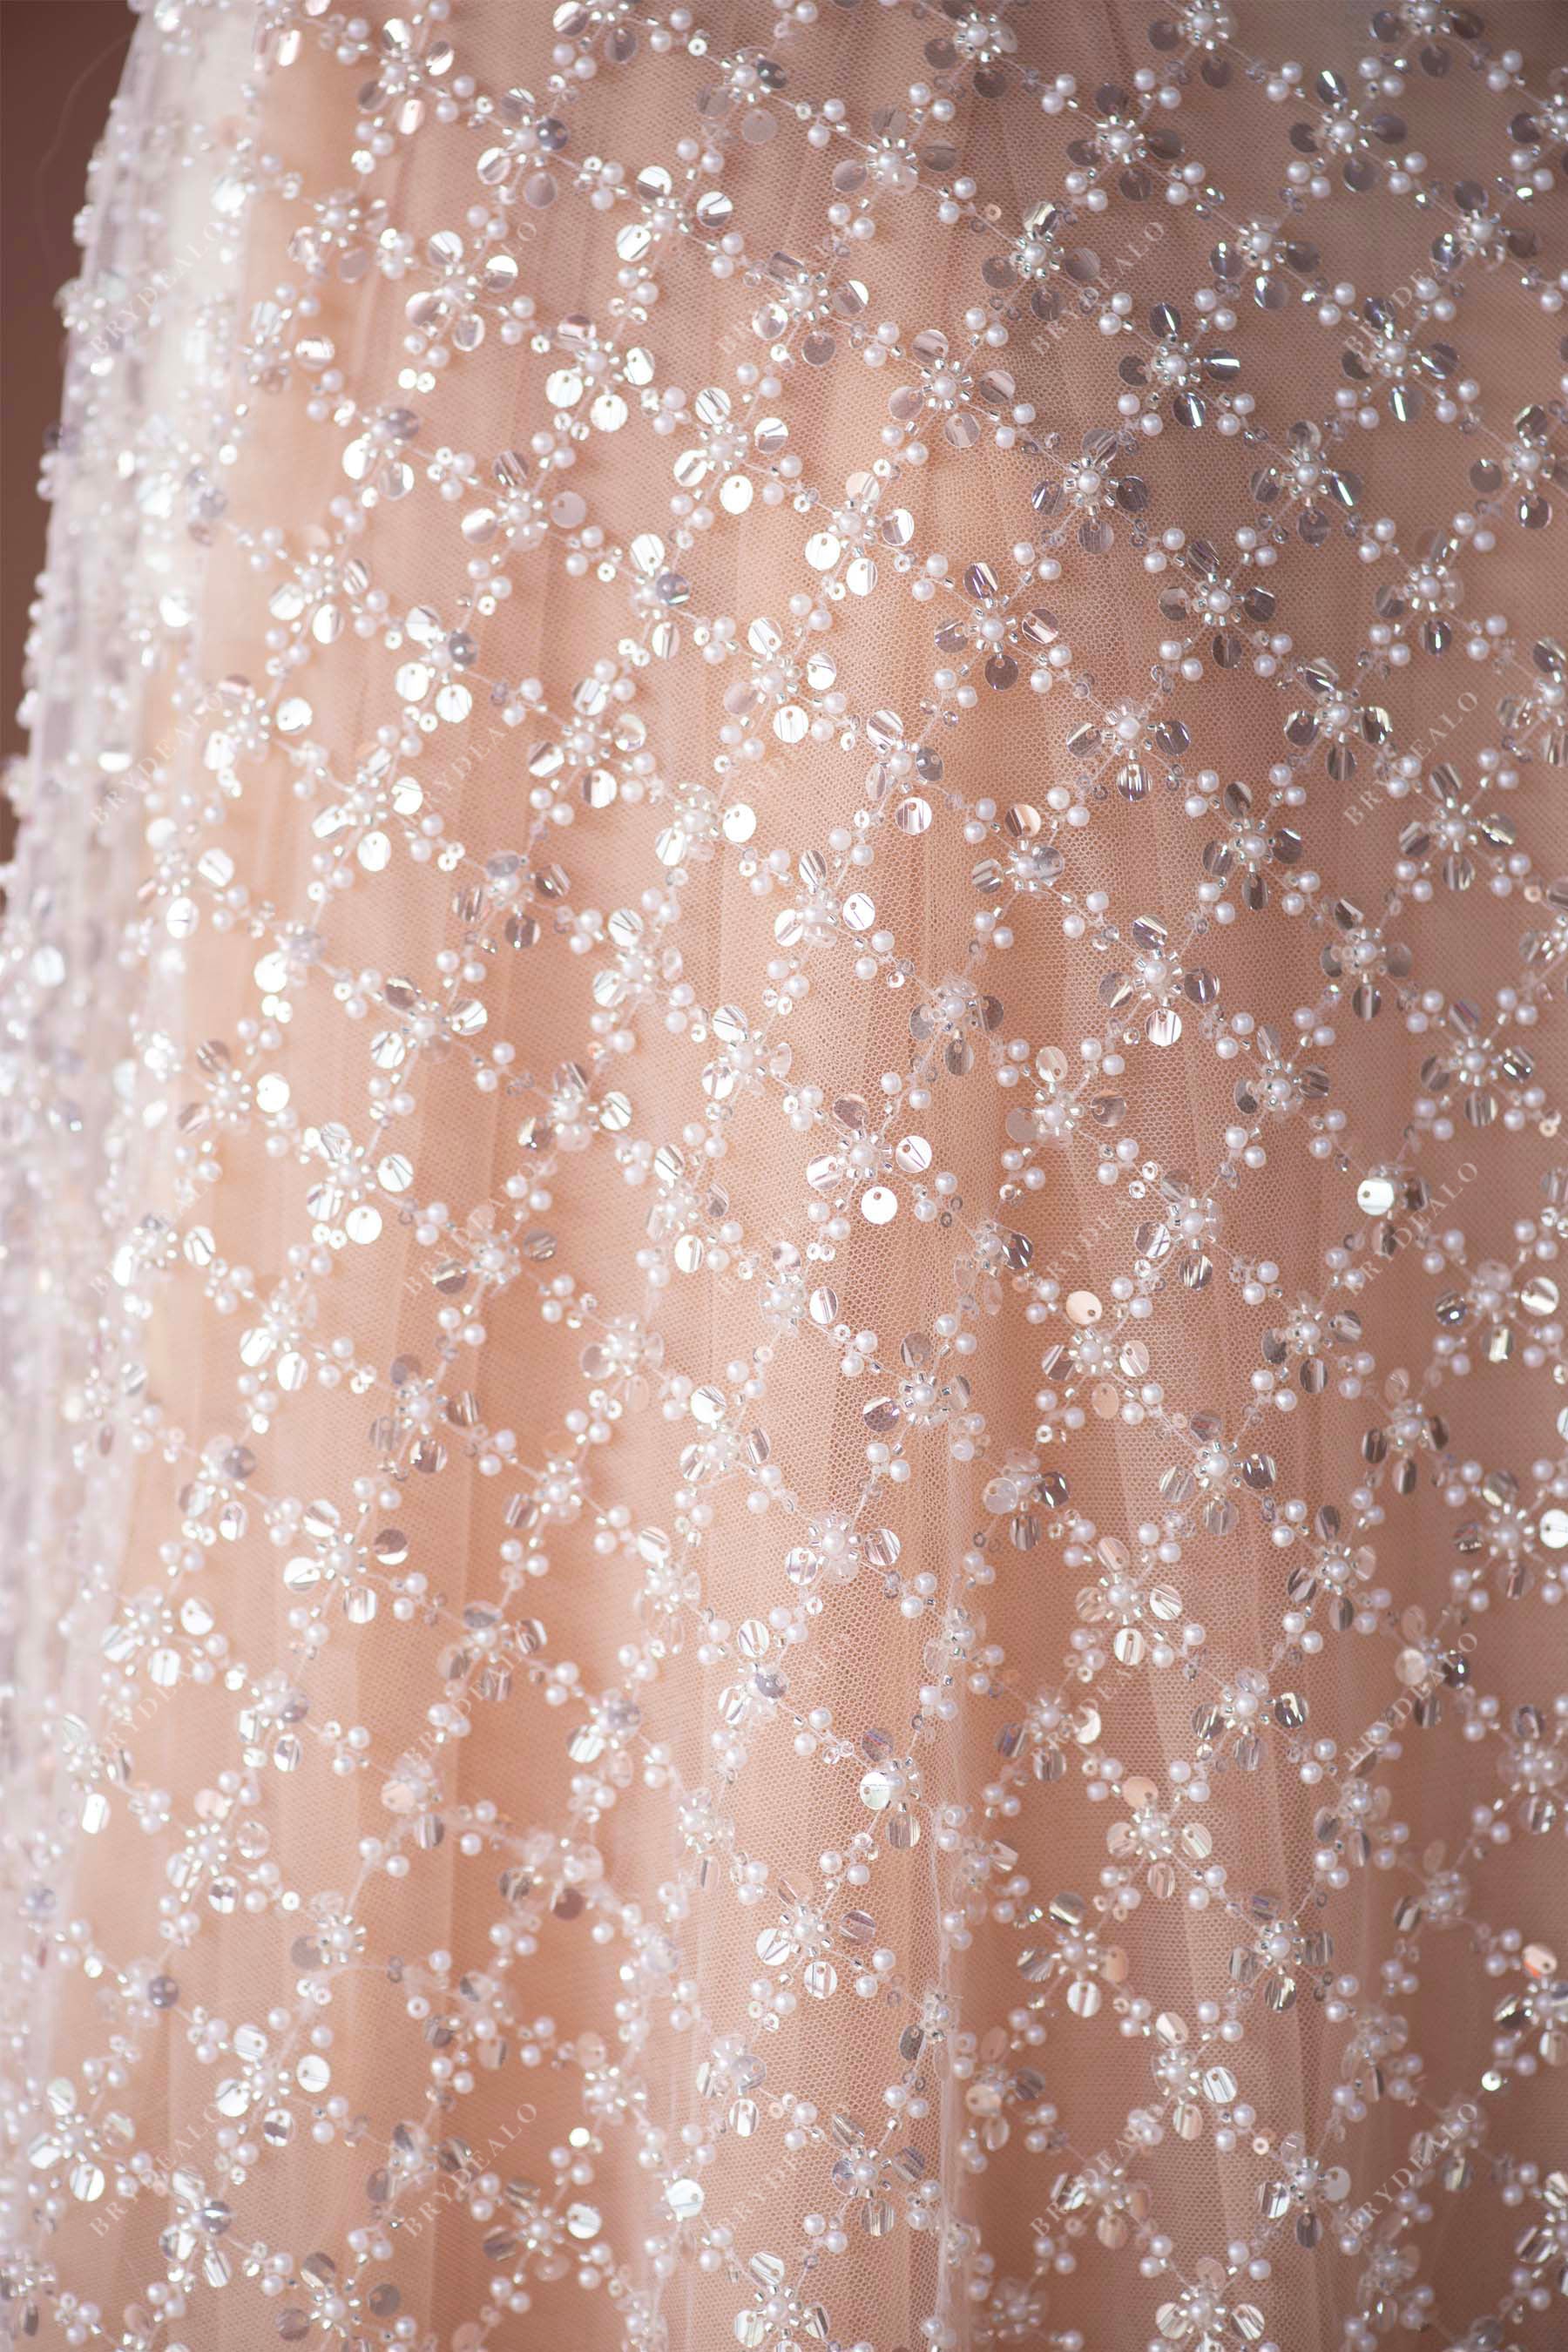 fashion rhombus designer sparkly lace fabric for wedding dress